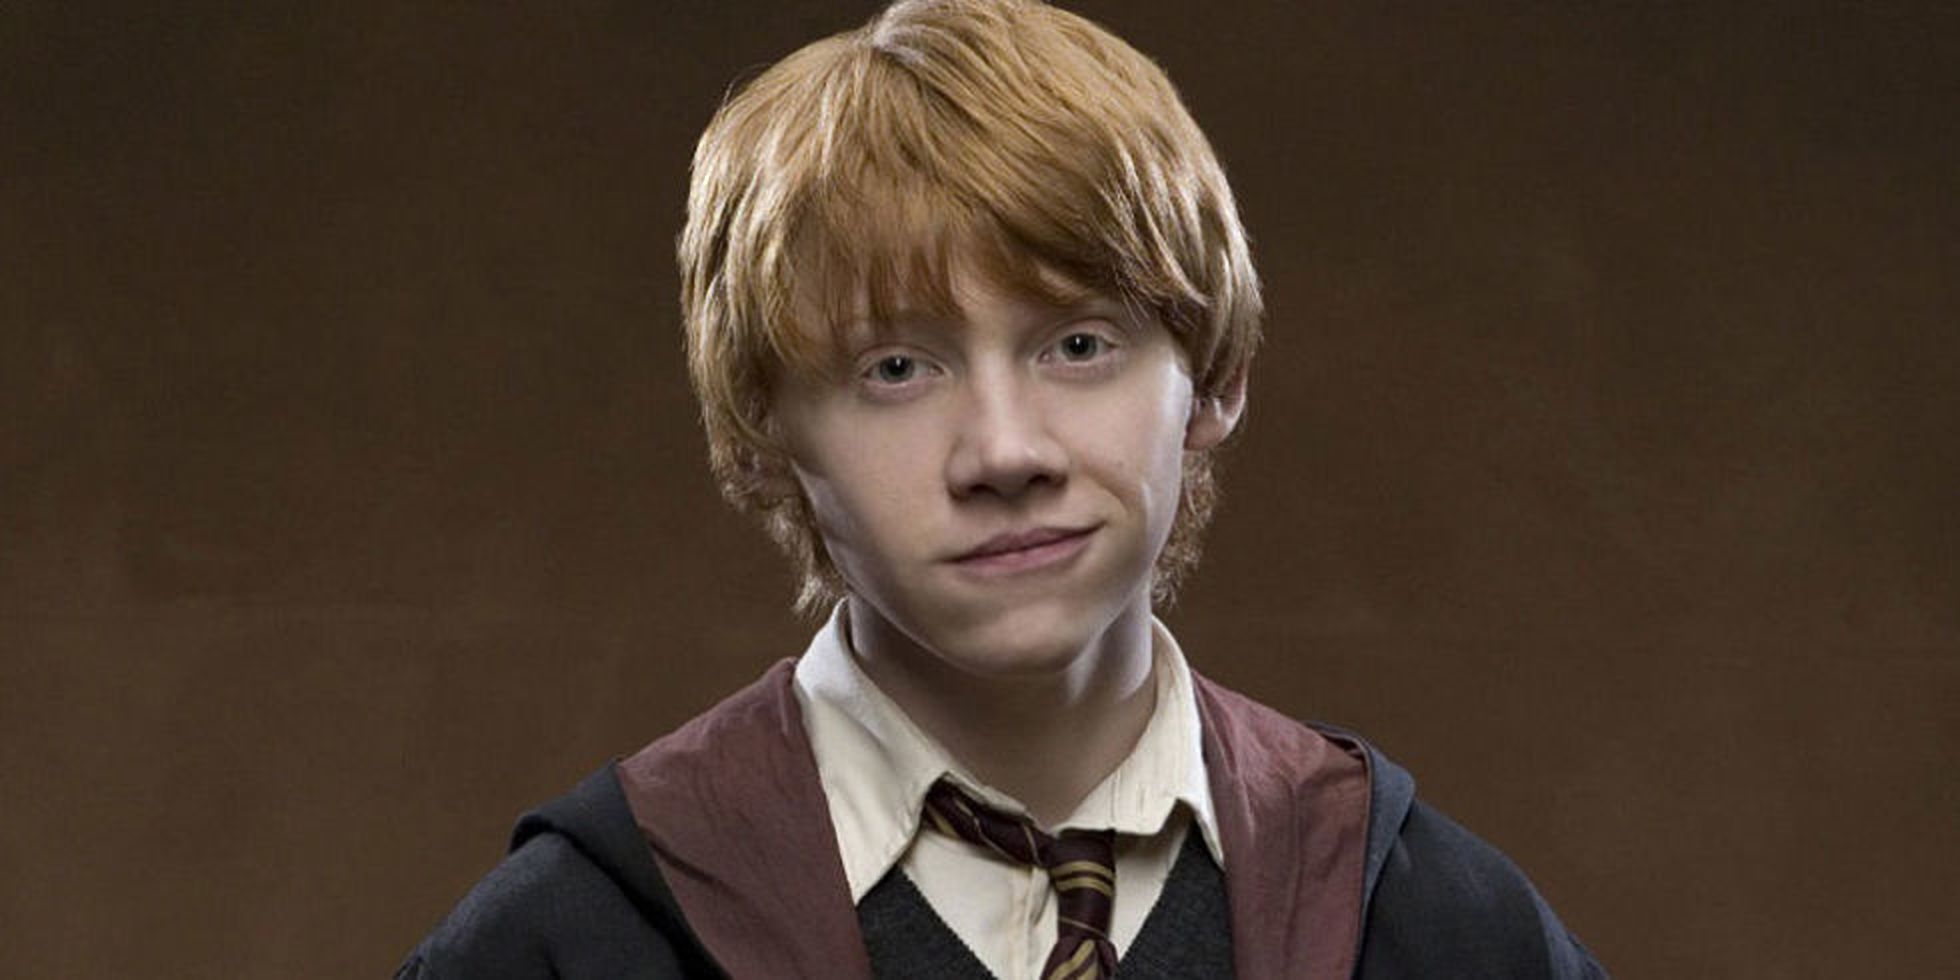 Ron Weasley in his uniform in Harry Potter